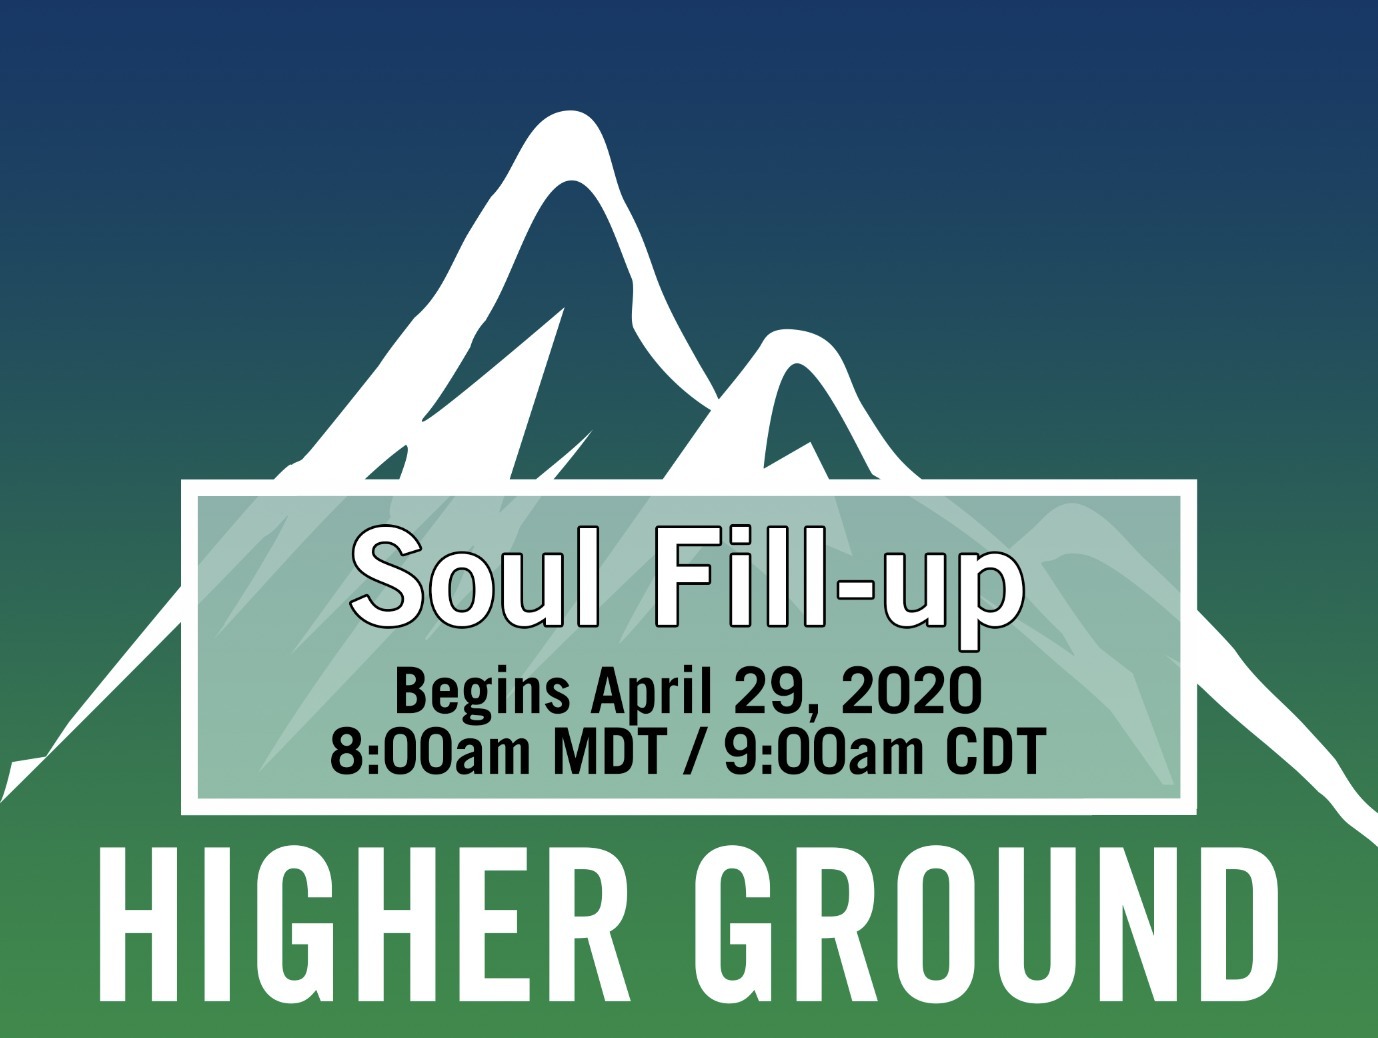 Higherground Soul Fill Up